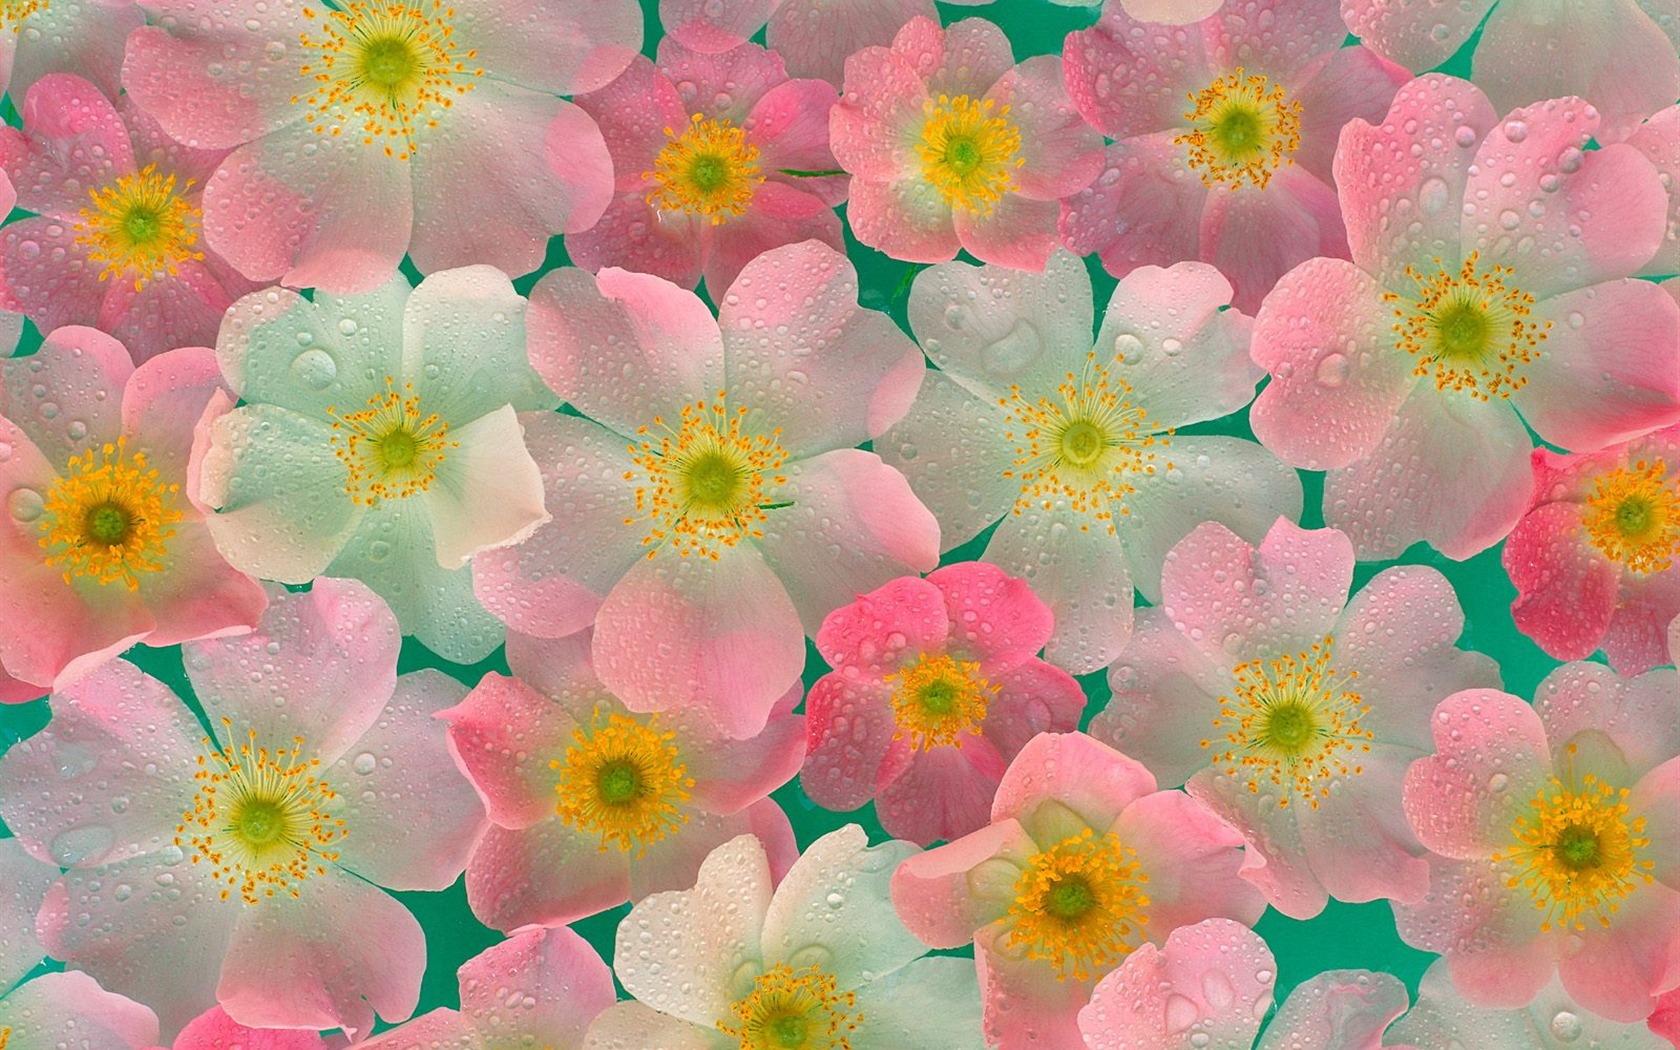 Flowers close-up (19) #9 - 1680x1050